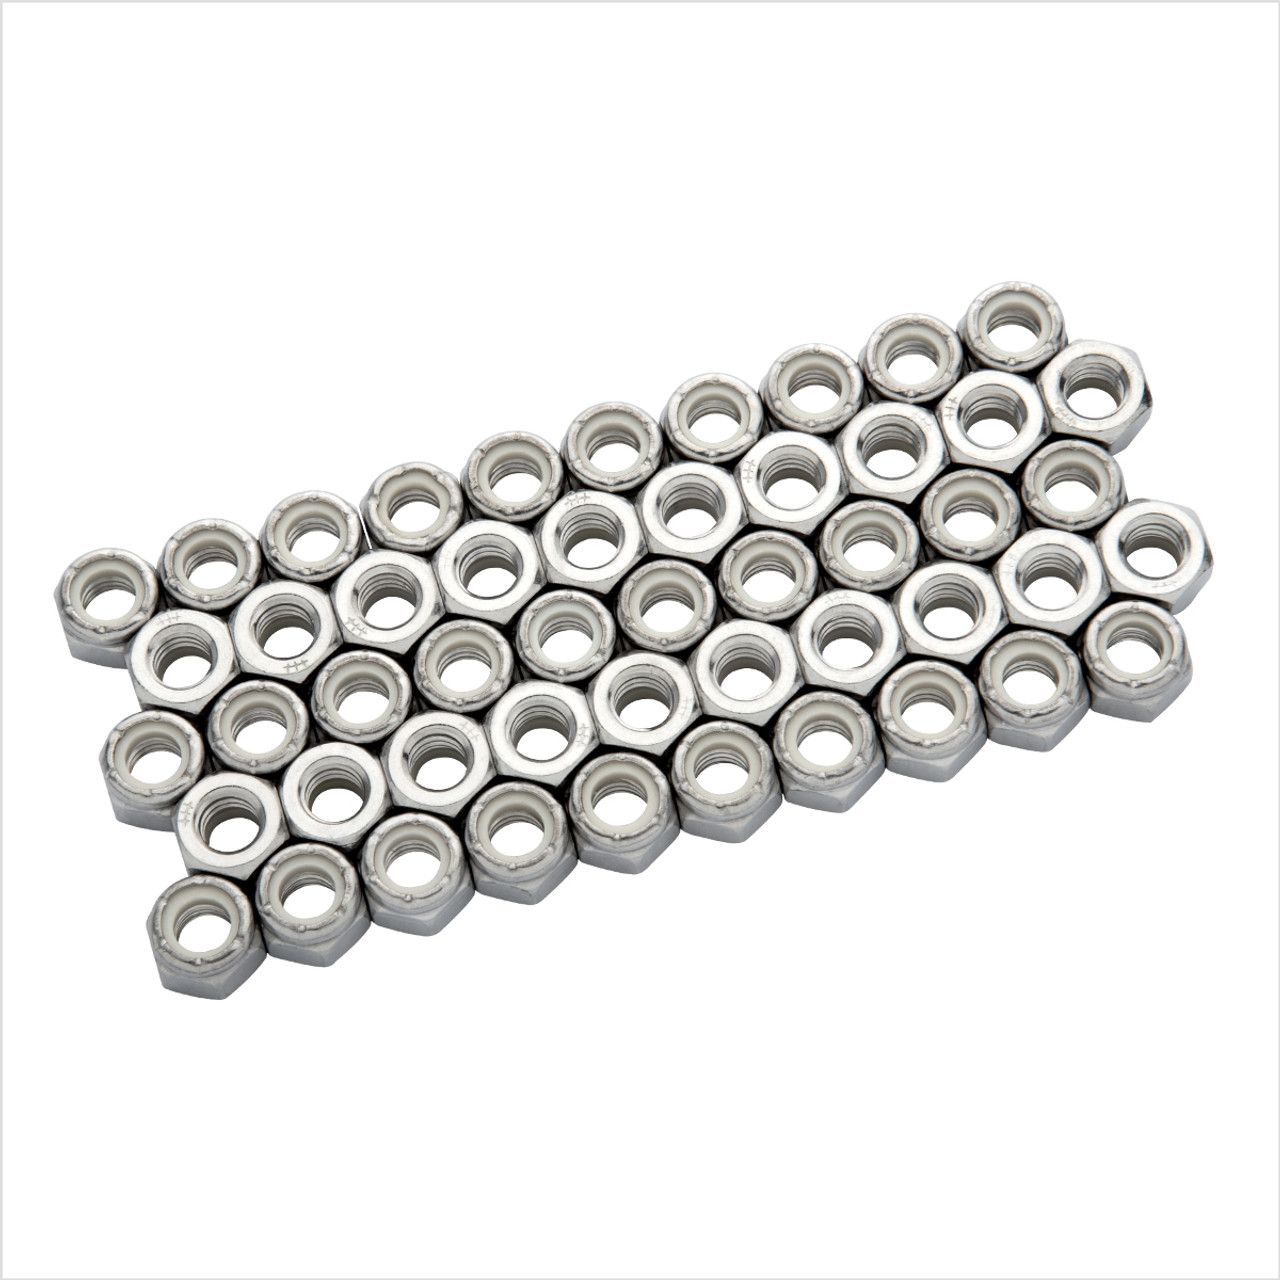 Stainless Steel 304 Nylon Insert Lock Nut,3/8